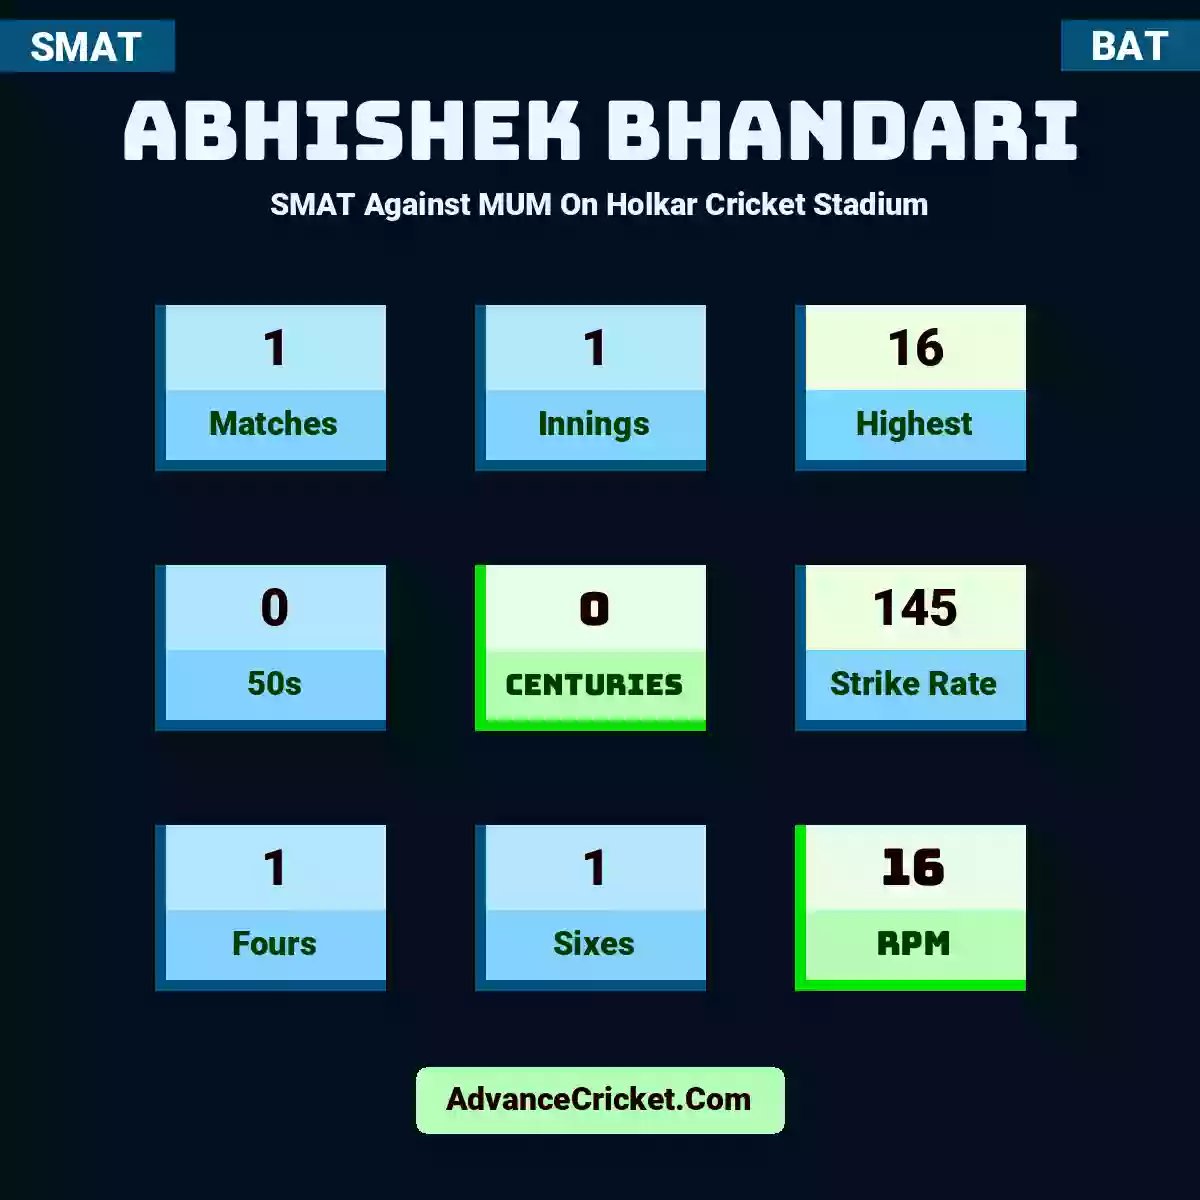 Abhishek Bhandari SMAT  Against MUM On Holkar Cricket Stadium, Abhishek Bhandari played 1 matches, scored 16 runs as highest, 0 half-centuries, and 0 centuries, with a strike rate of 145. A.Bhandari hit 1 fours and 1 sixes, with an RPM of 16.